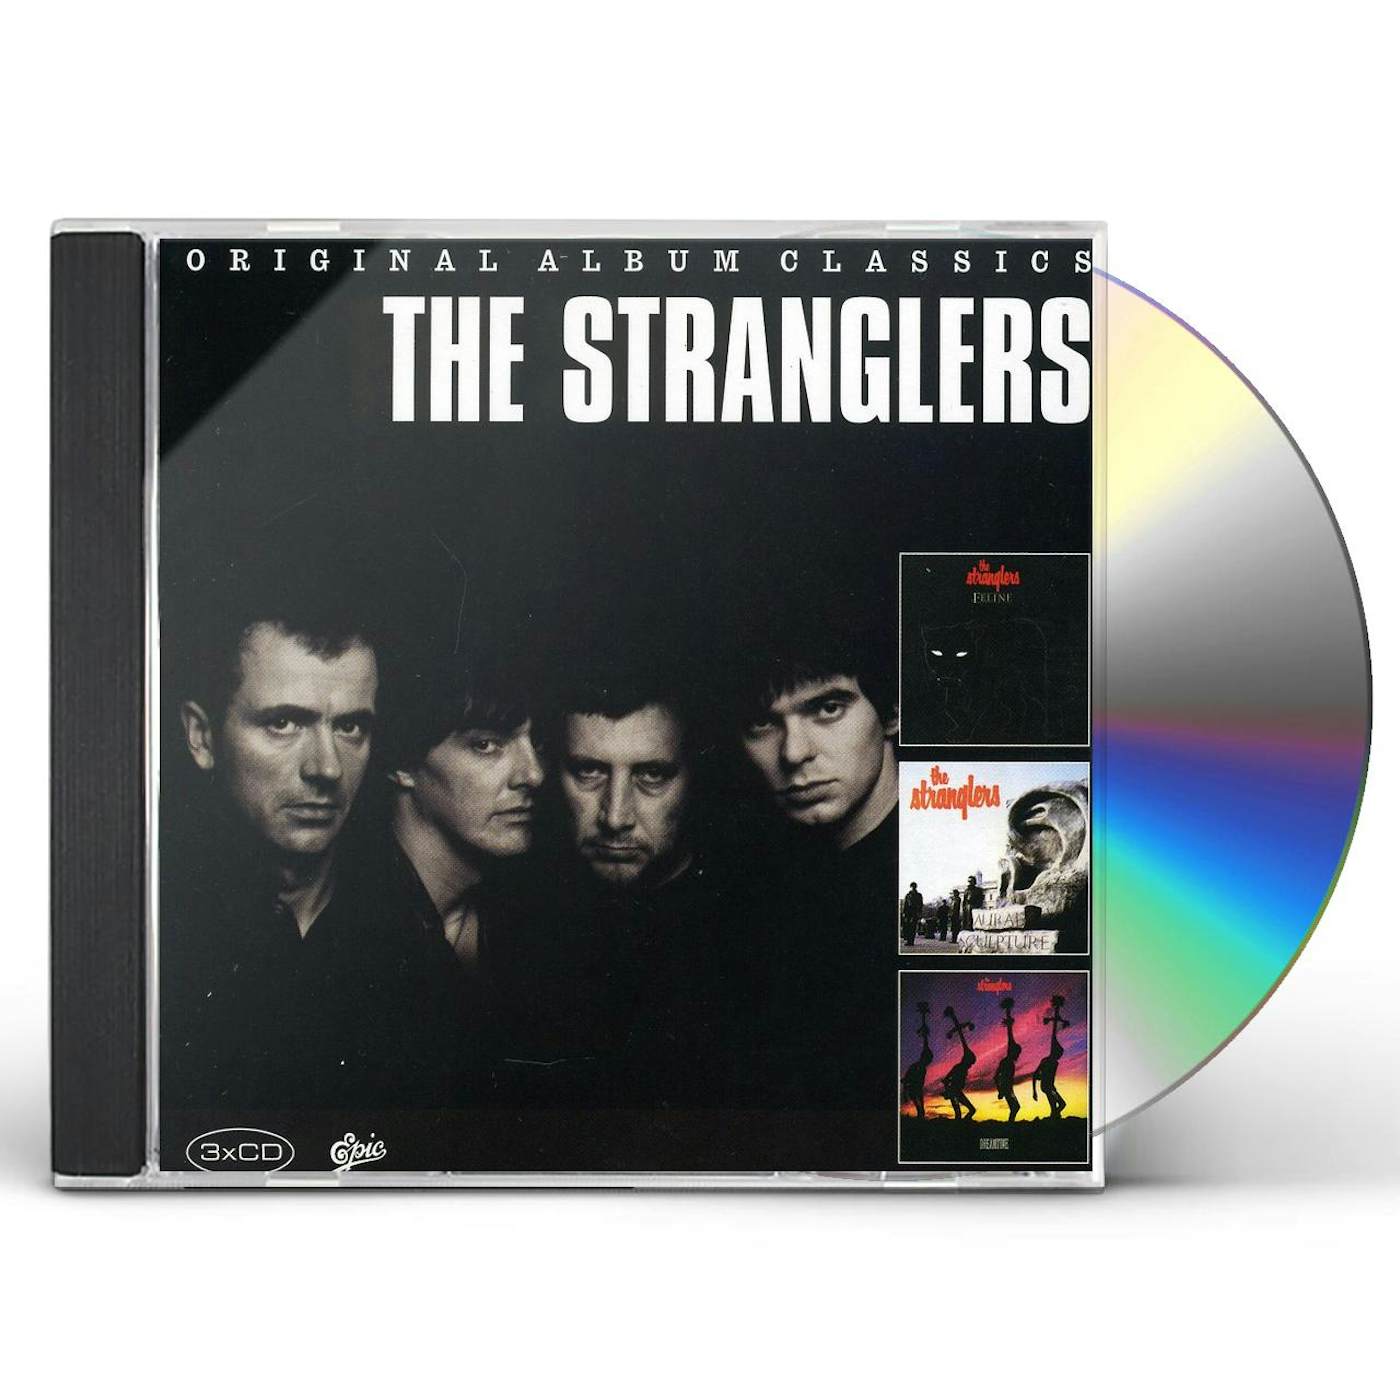 The Stranglers ORIGINAL ALBUM CLASSICS CD